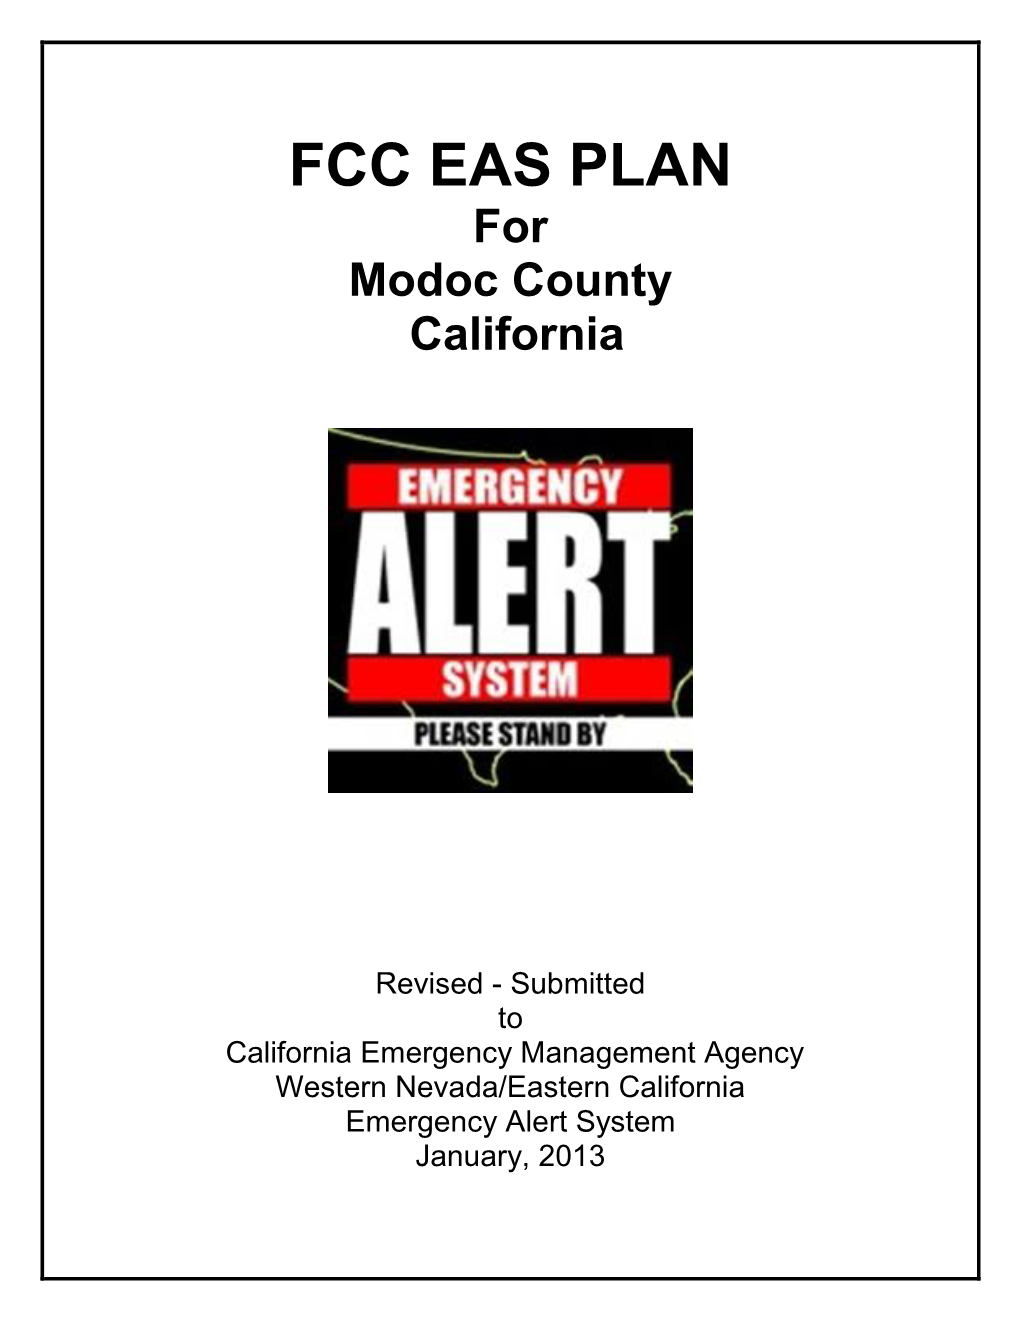 FCC EAS PLAN for Modoc County California